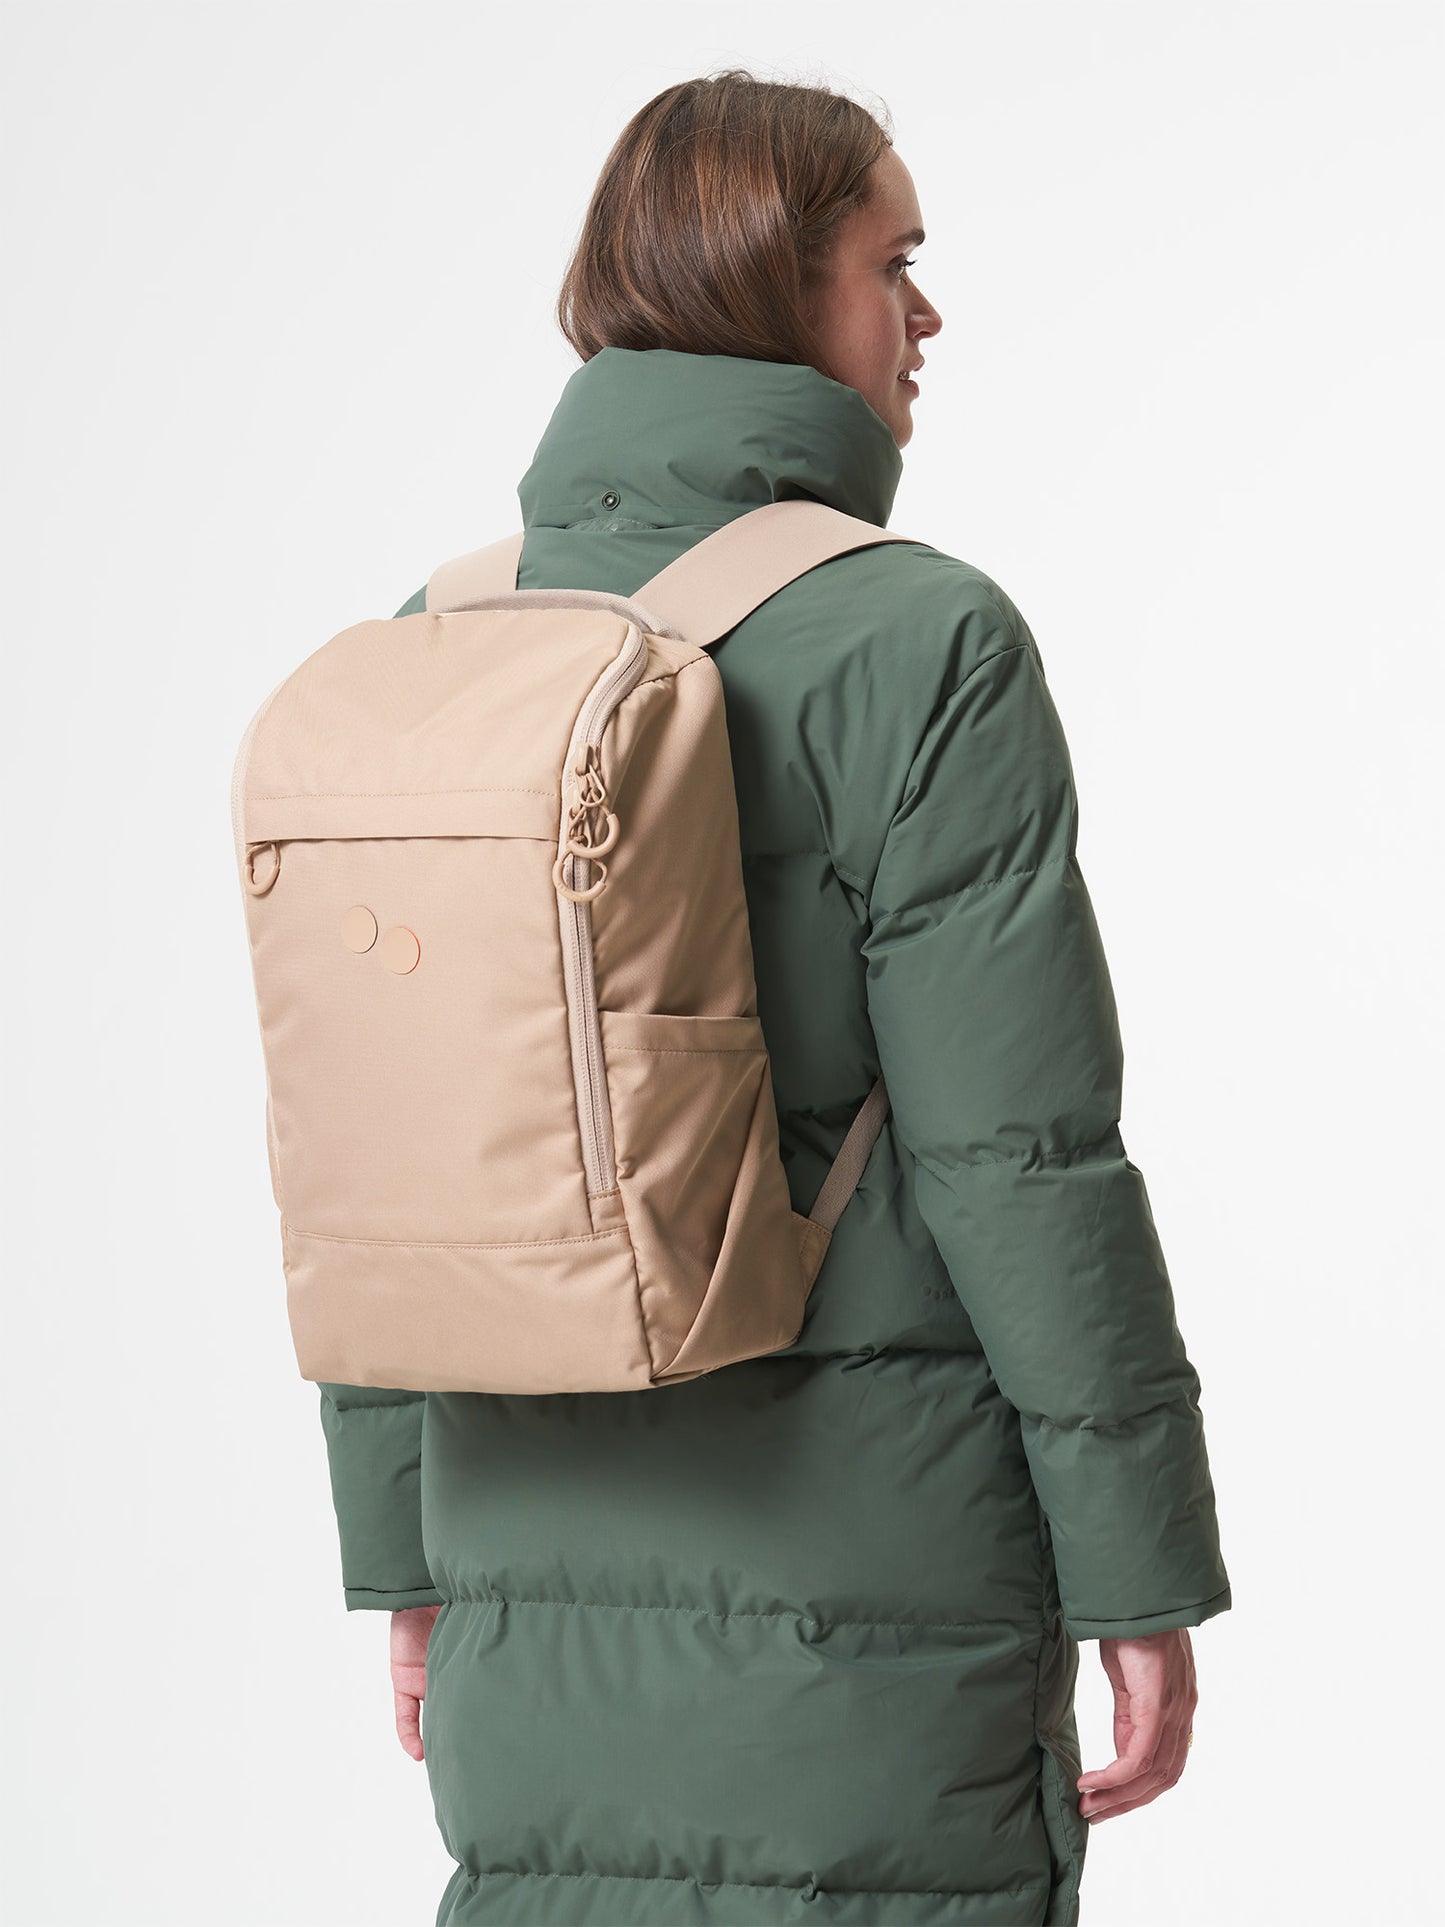 pinqponq-backpack-Purik-Caramel-Khaki-model-front